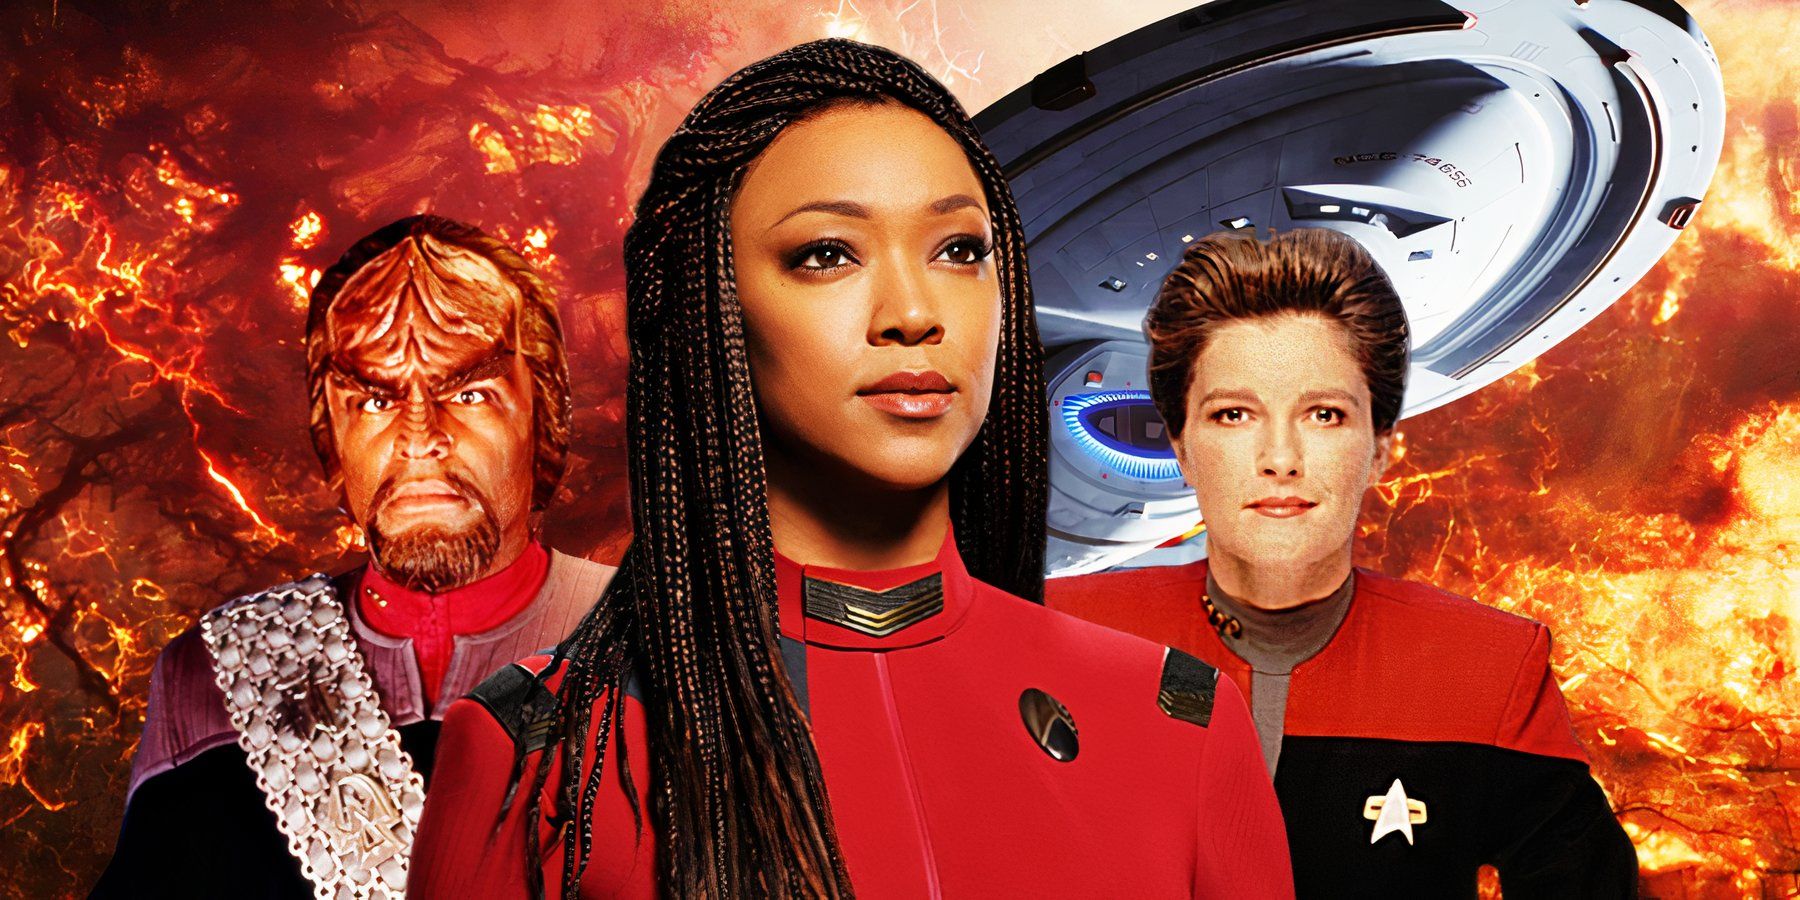 Michael Dorn as Worf, Sonequa Martin-Green as Burnham, and Kate Mulgrew as Janeway in Star Trek